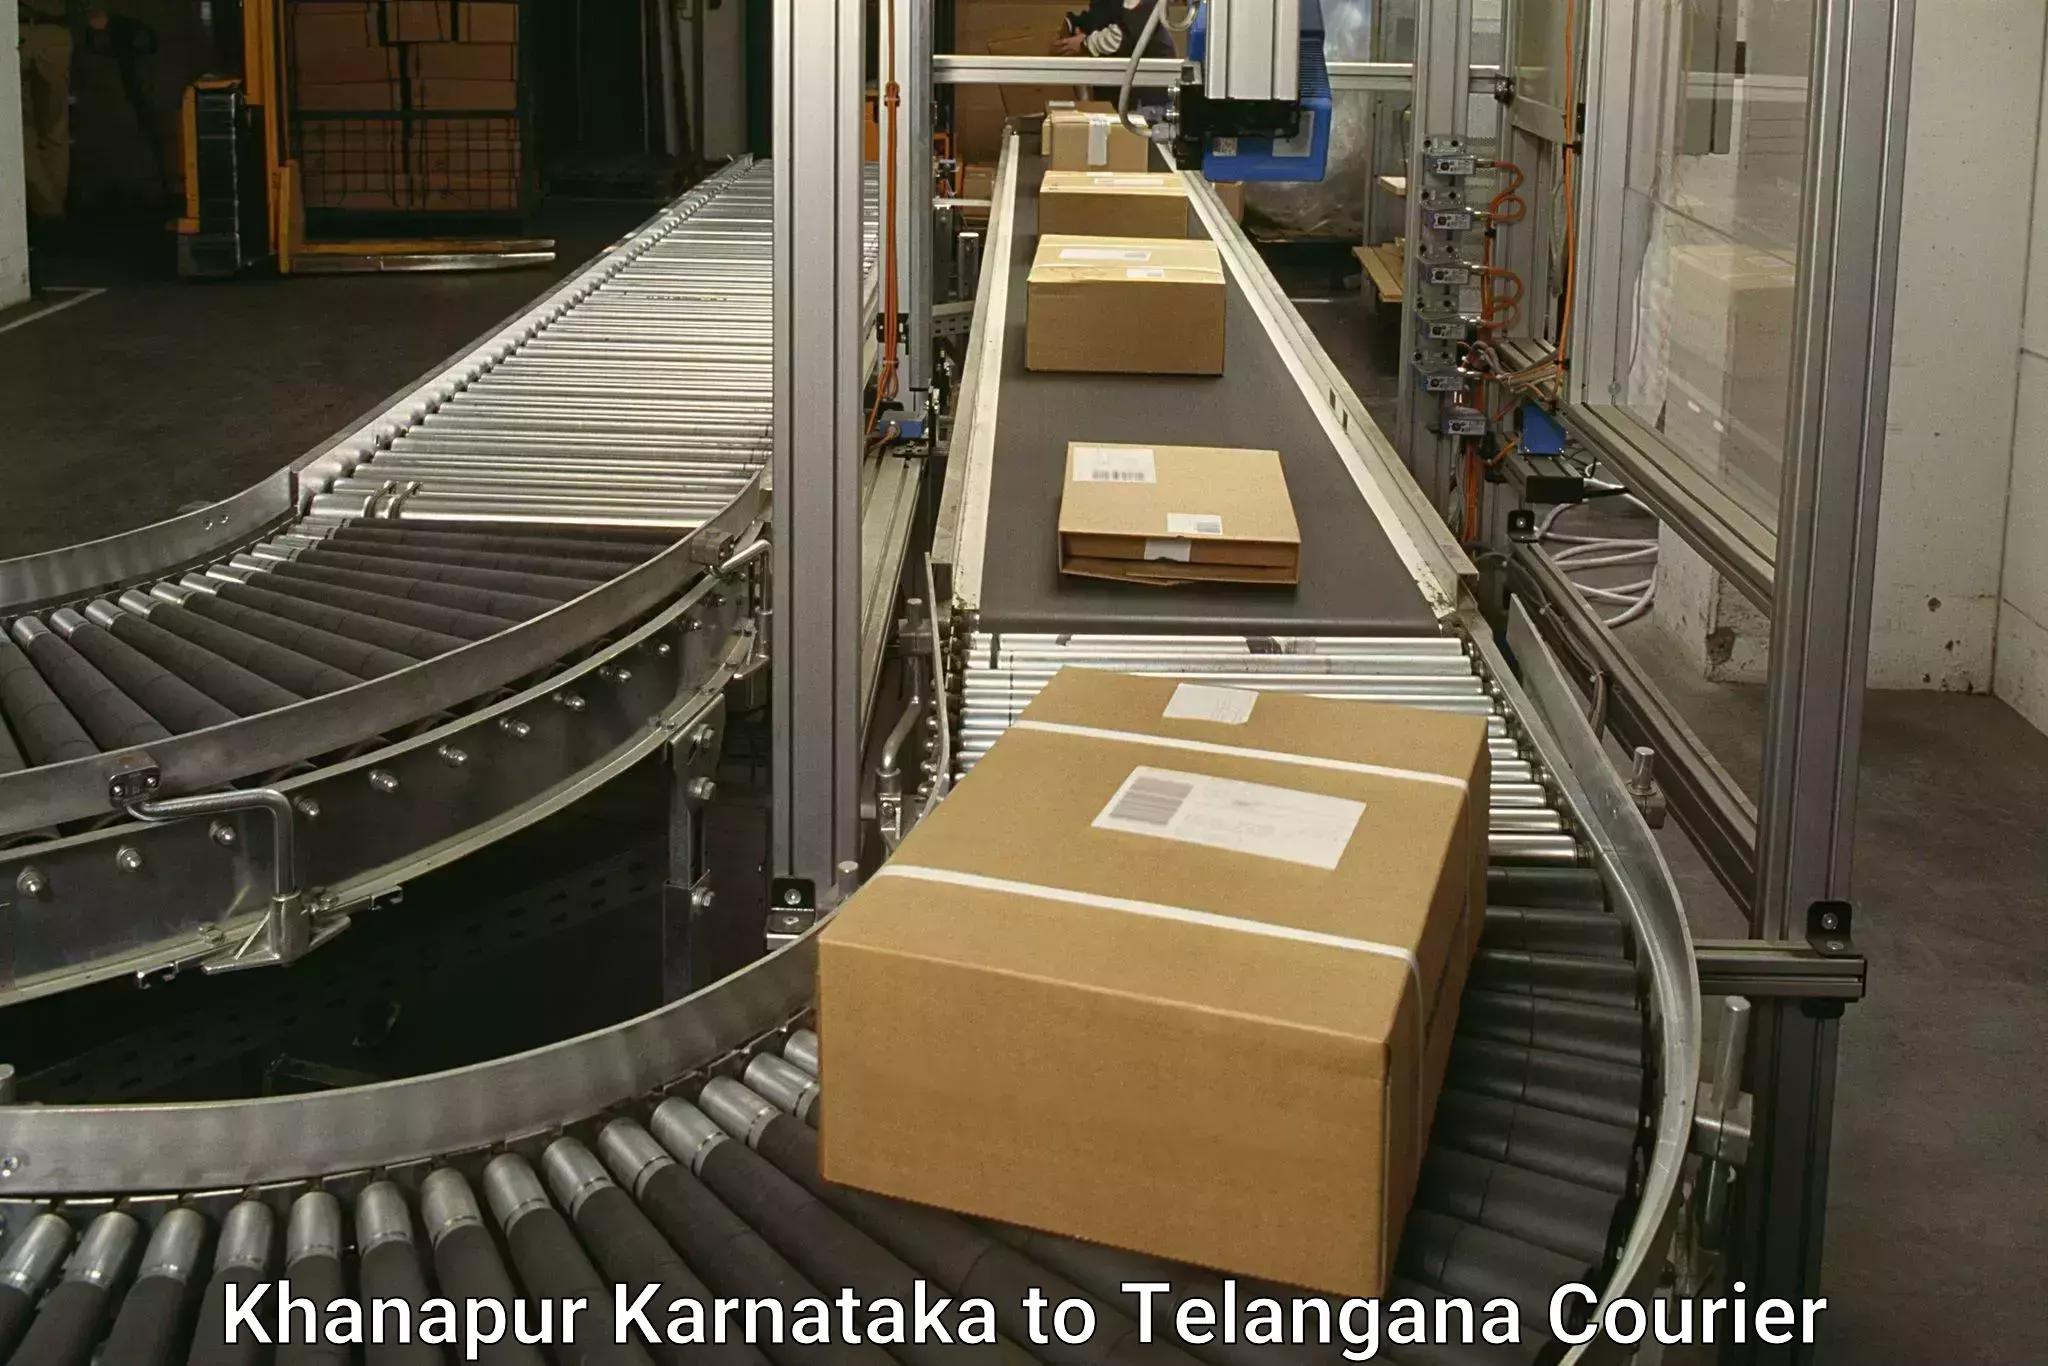 Courier service booking Khanapur Karnataka to Kacheguda